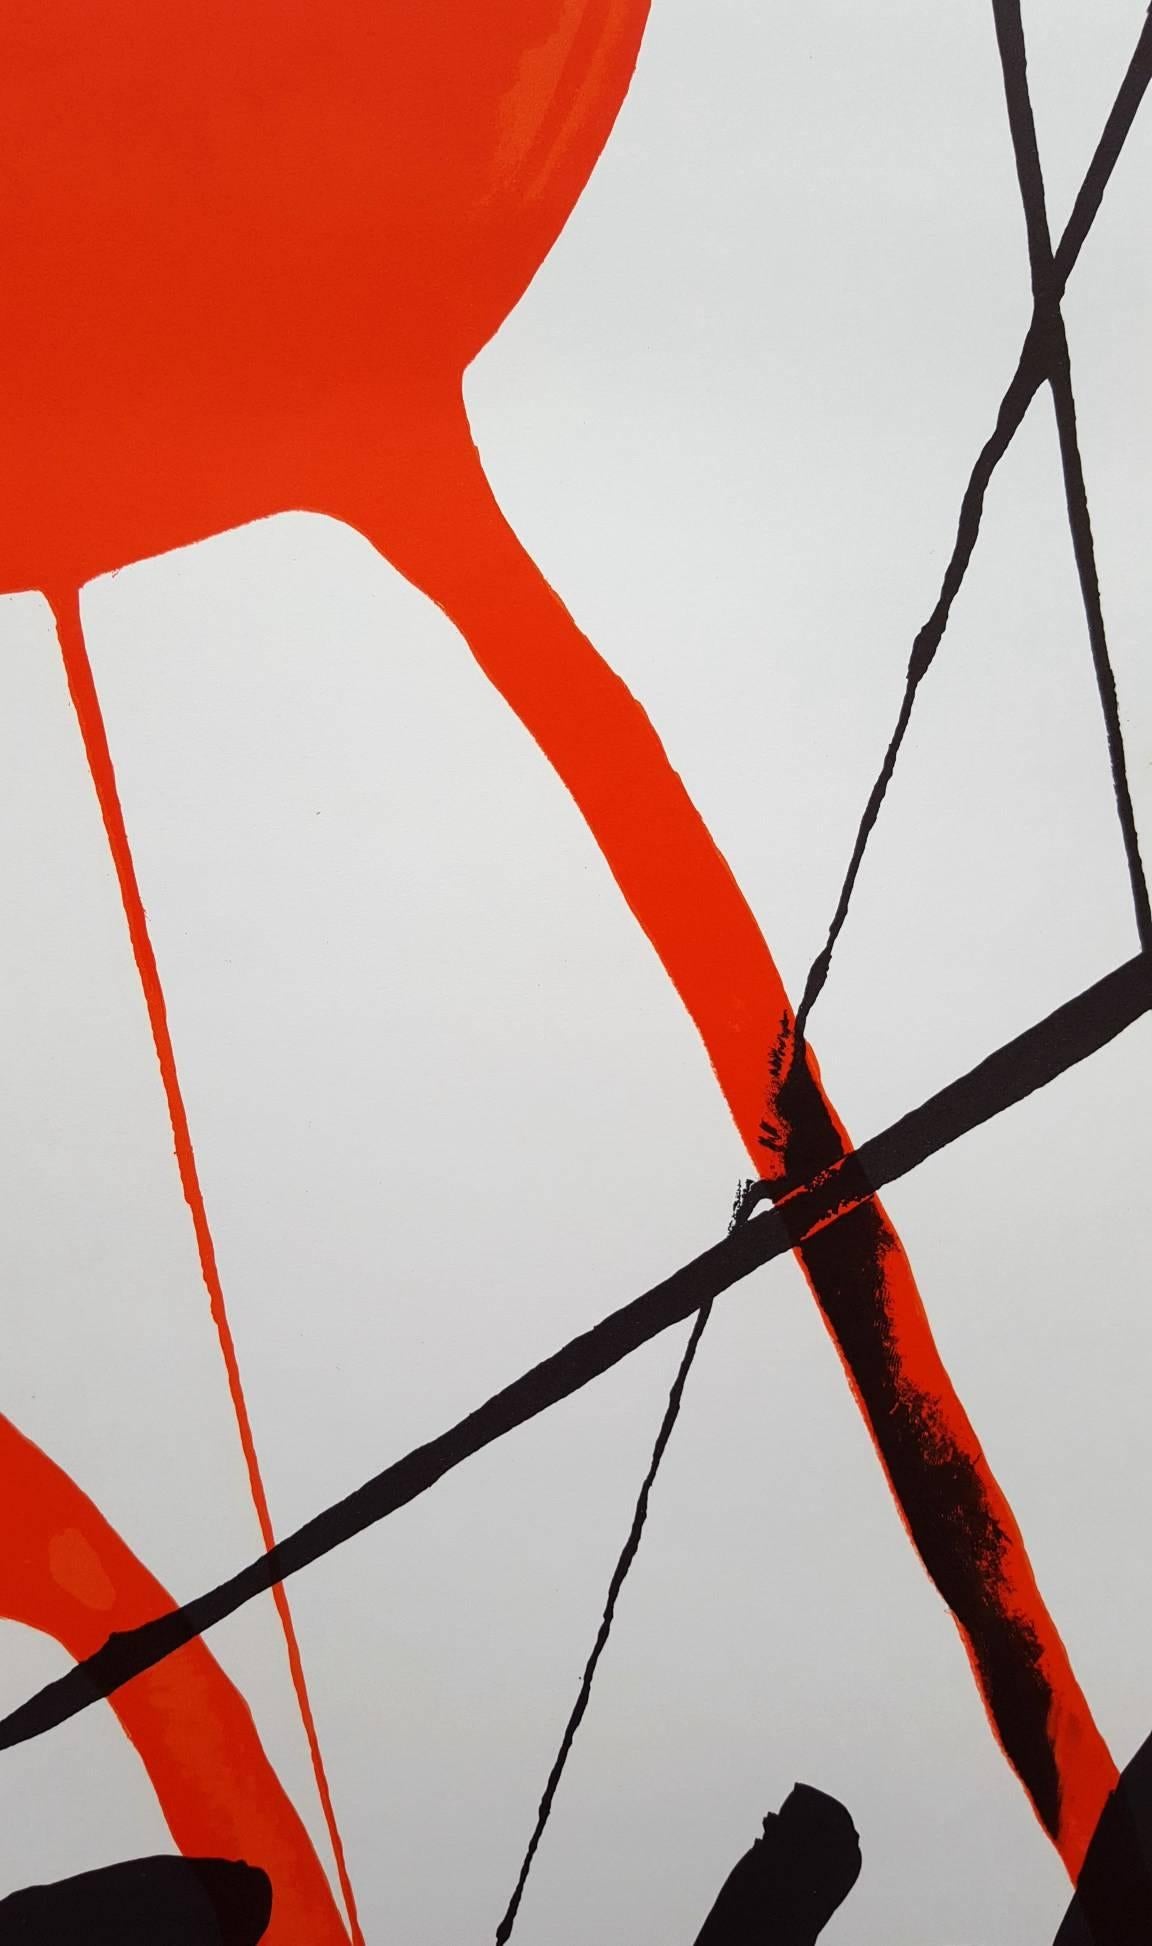 An original lithograph exhibition poster by American artist Alexander Calder (1898-1976) titled "Fleches", 1968. This original exhibition poster was produced for Calder's exhibition "Fleches" at Galerie Maeght in 1968. Printed